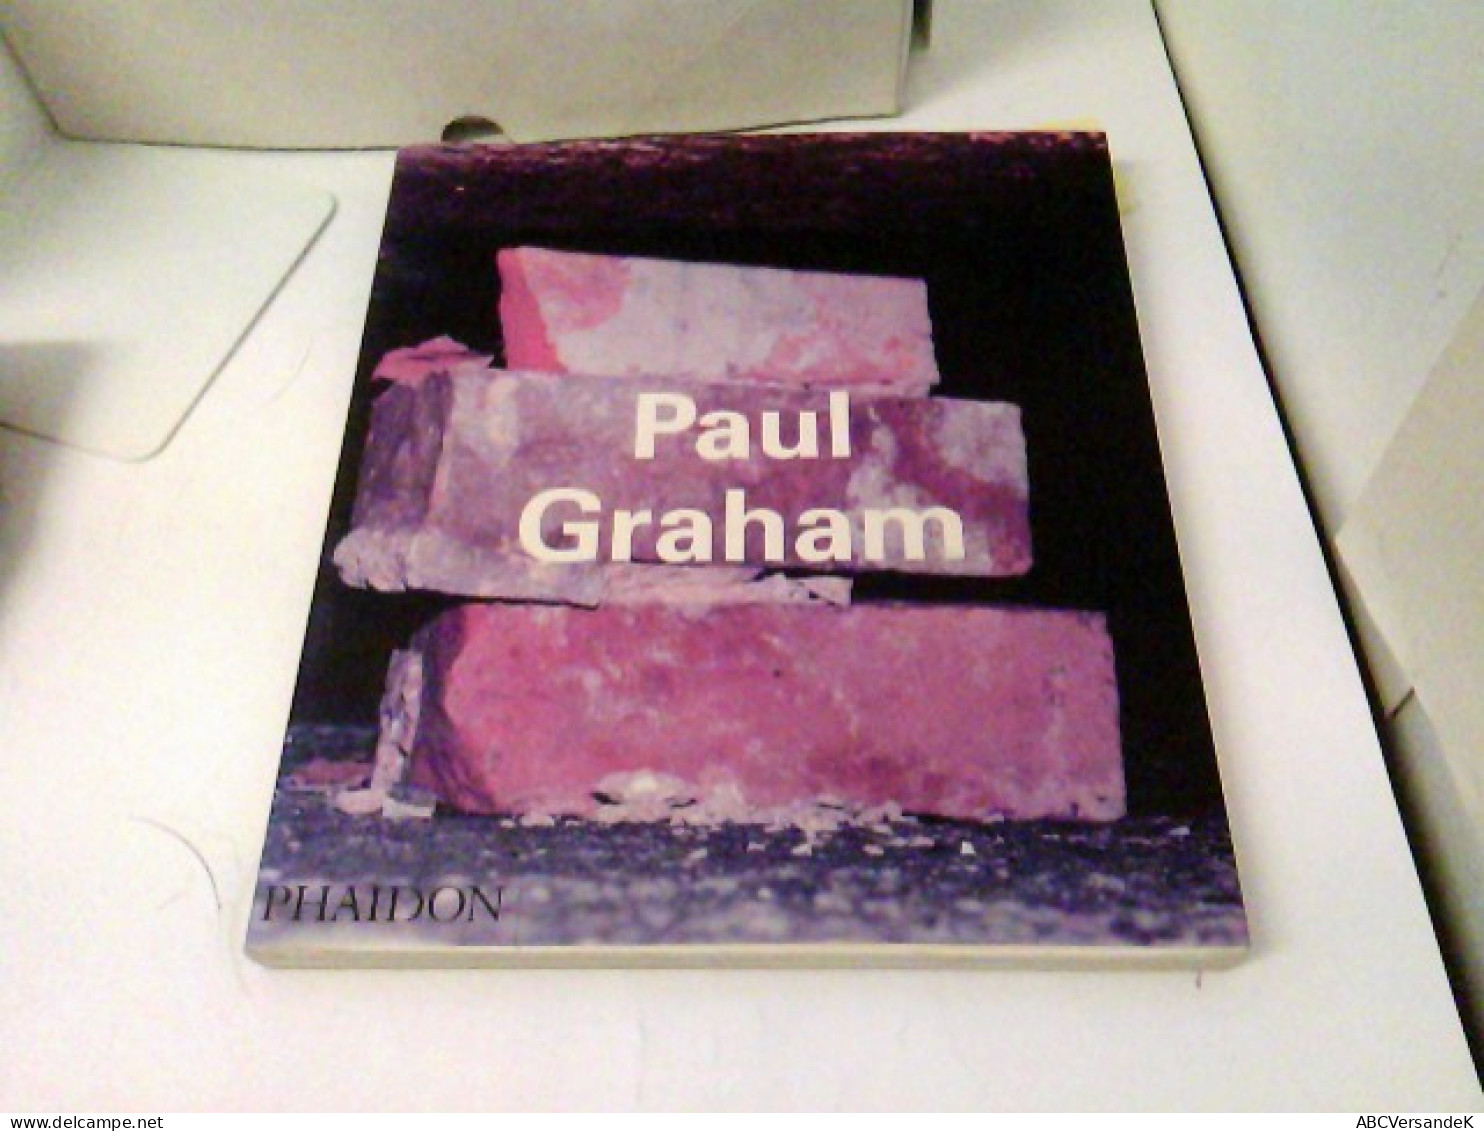 Paul Graham (Contemporary Artists (Phaidon)) - Photography